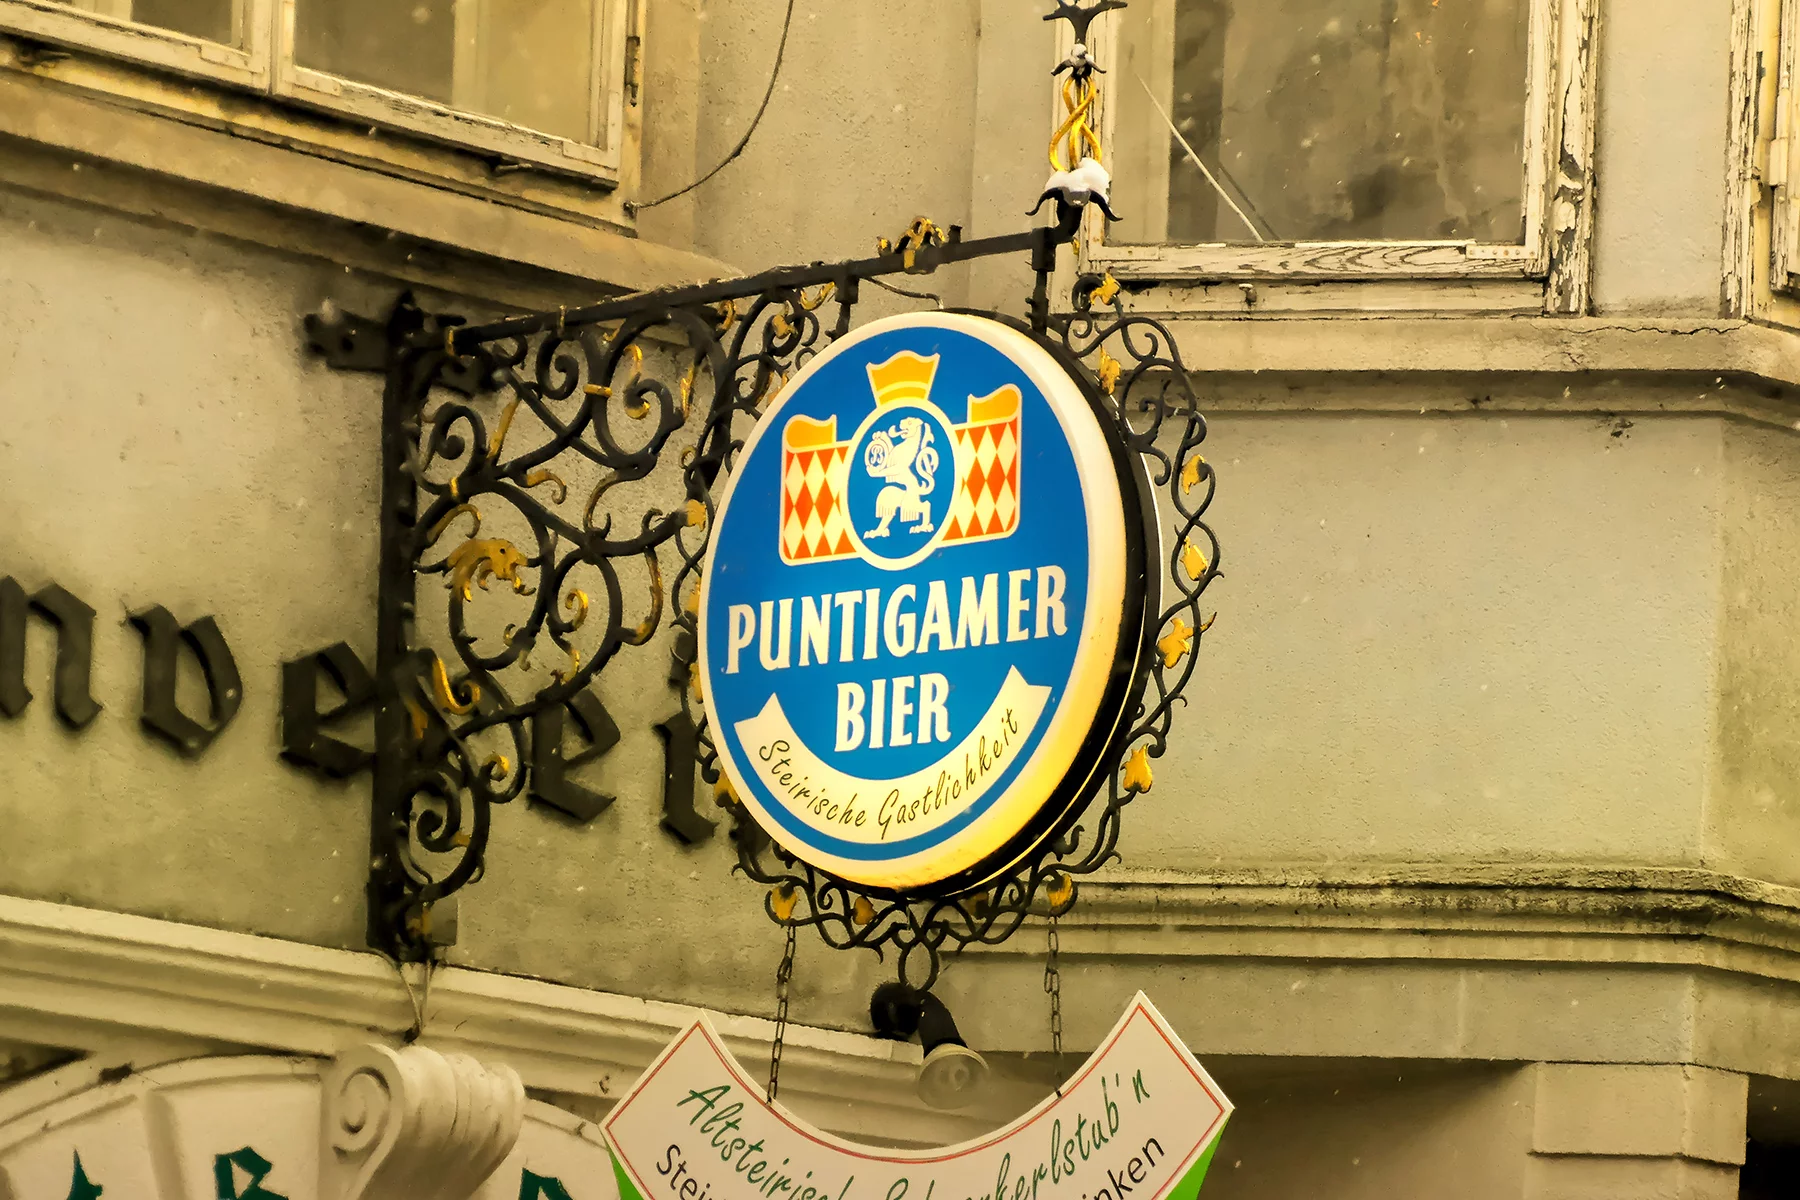 A bar in Graz serving Puntigamer beer